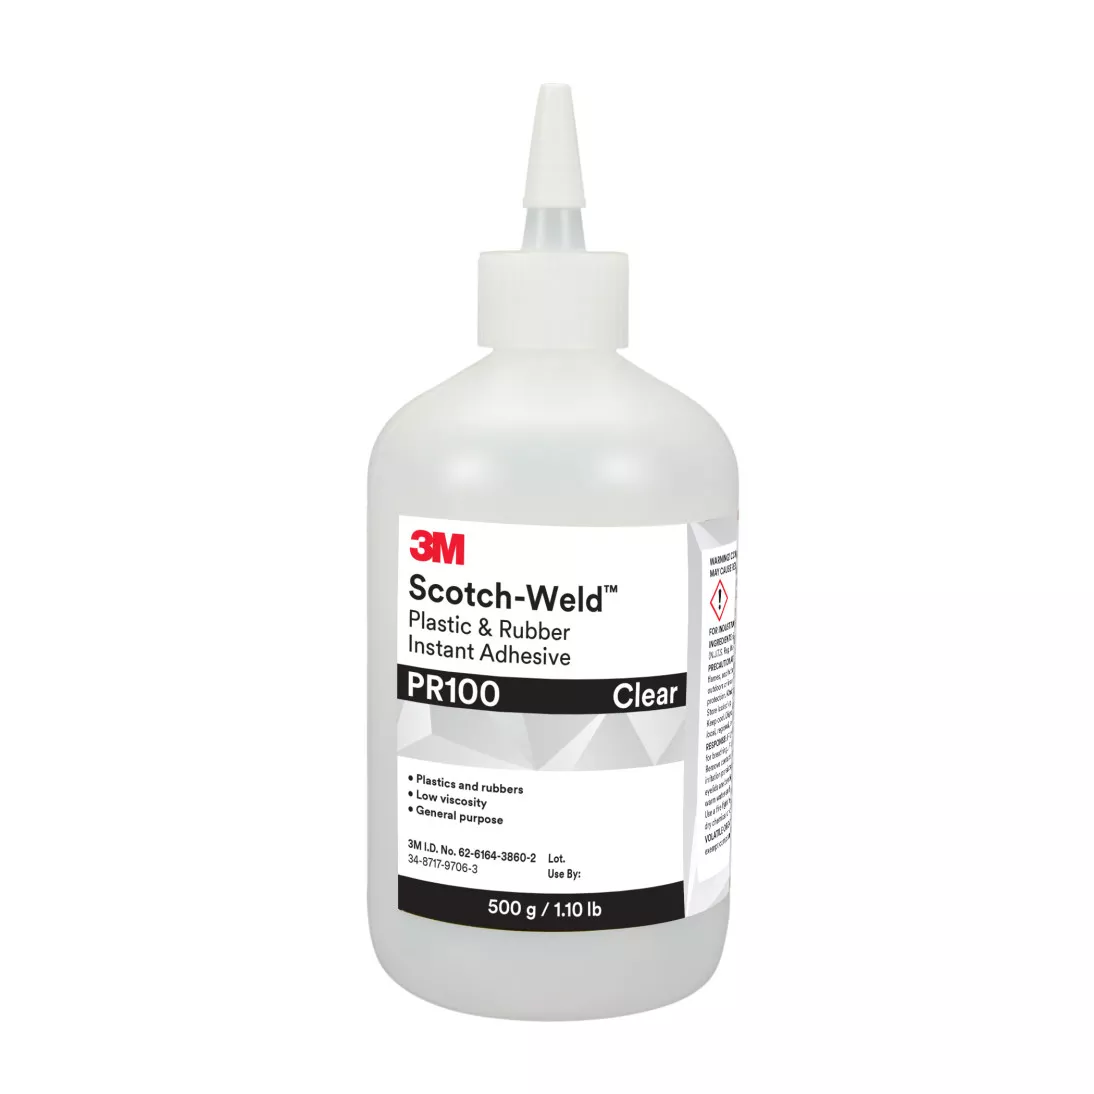 3M™ Scotch-Weld™ Plastic & Rubber Instant Adhesive PR100, Clear, 500
Gram Bottle, 1/case